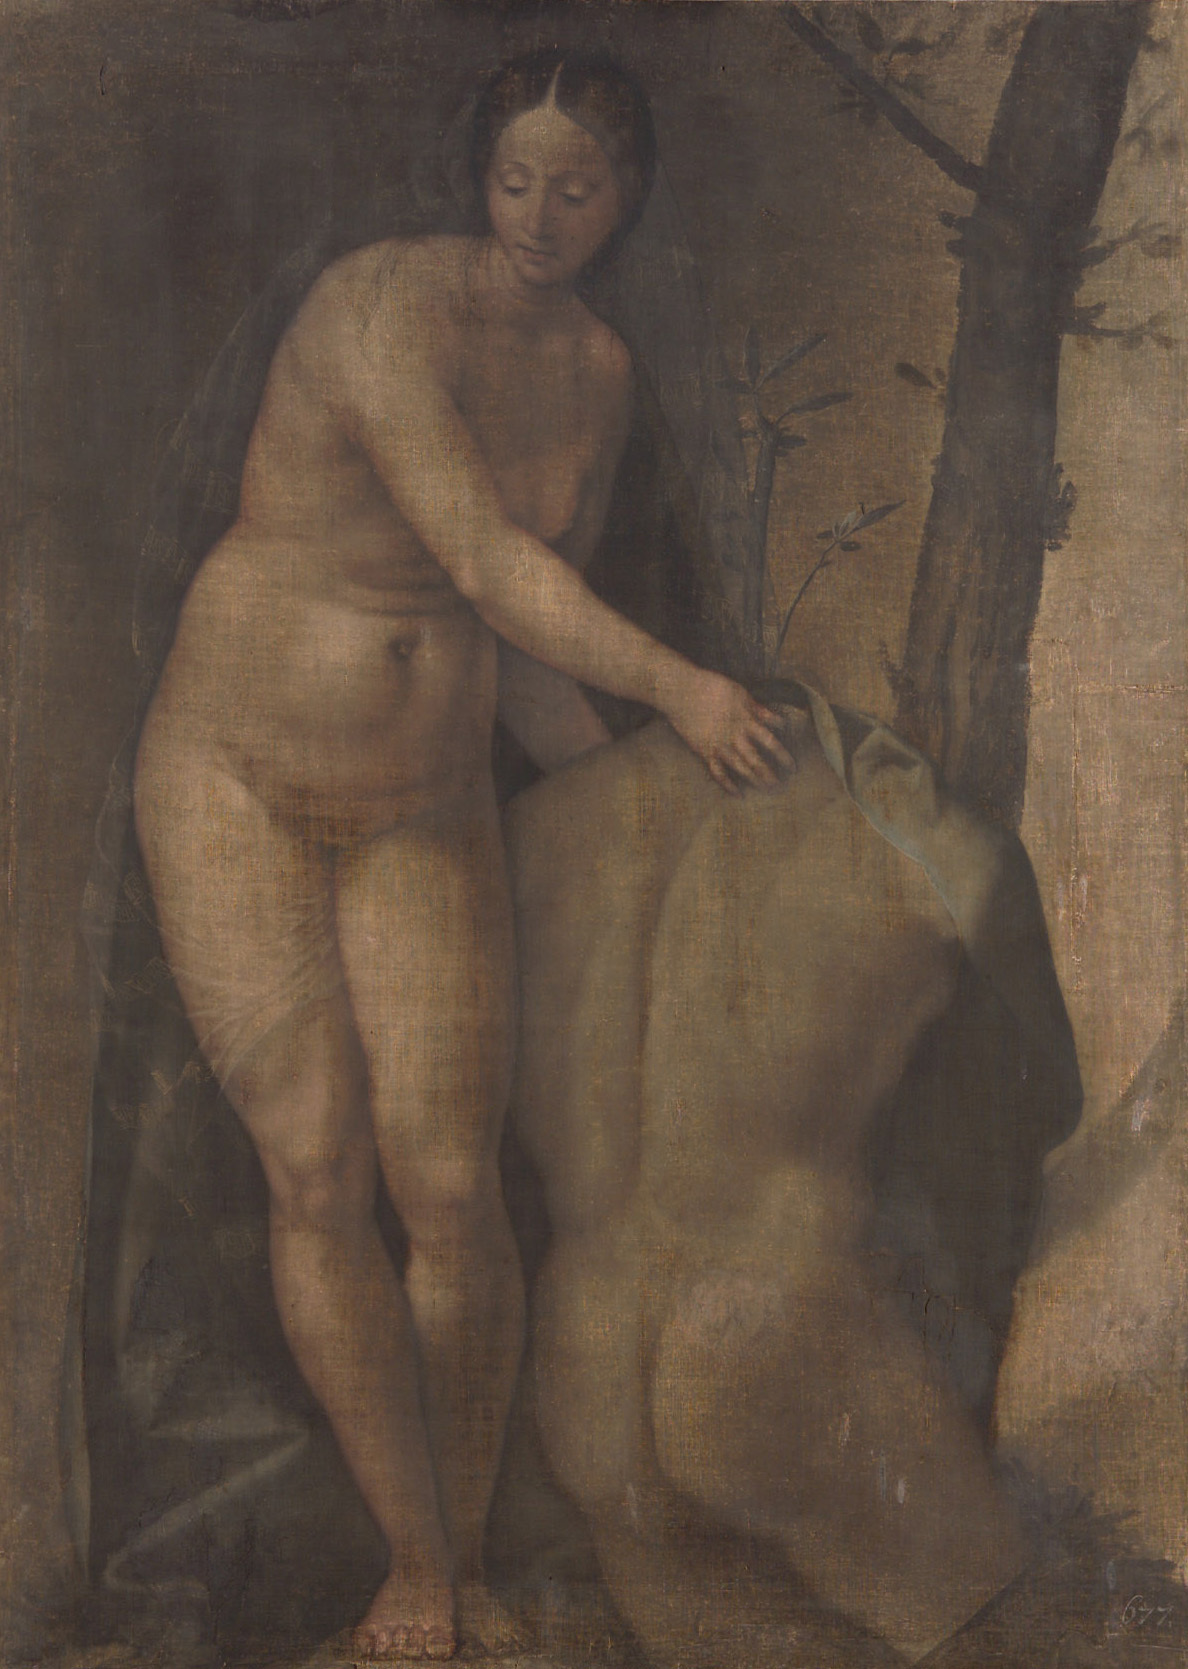 Female Nude with a Male Torso by Girolamo da Treviso - around 1525 - 107.5 cm × 77.5 cm Kunsthistorisches Museum